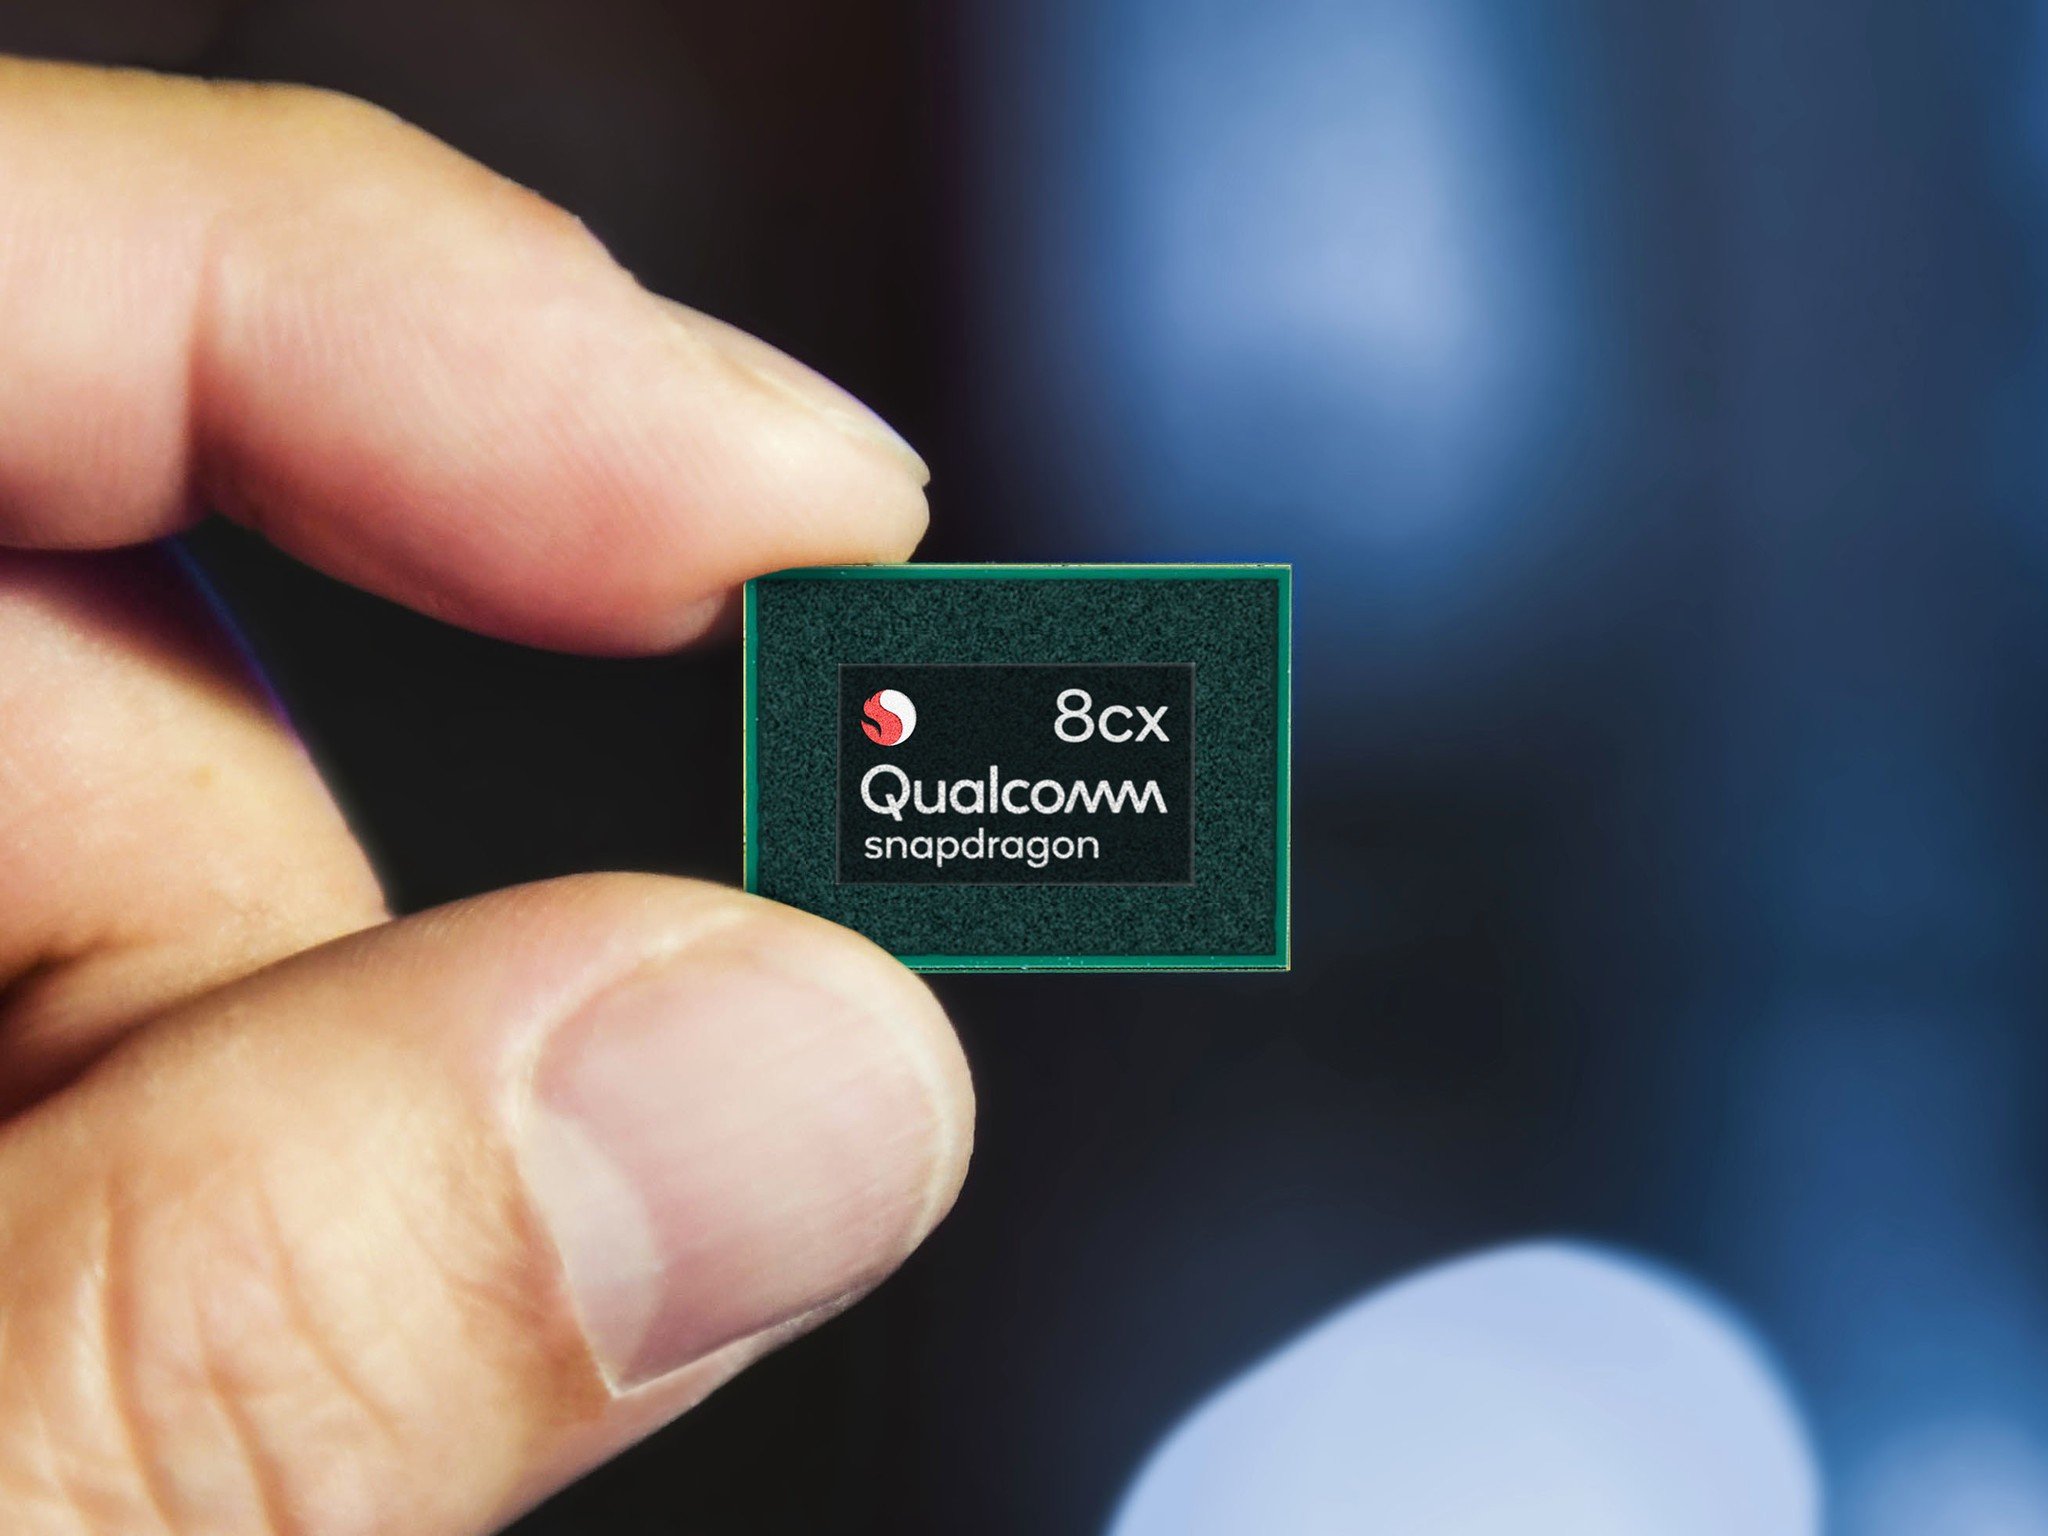 Snapdragon 8cx chip